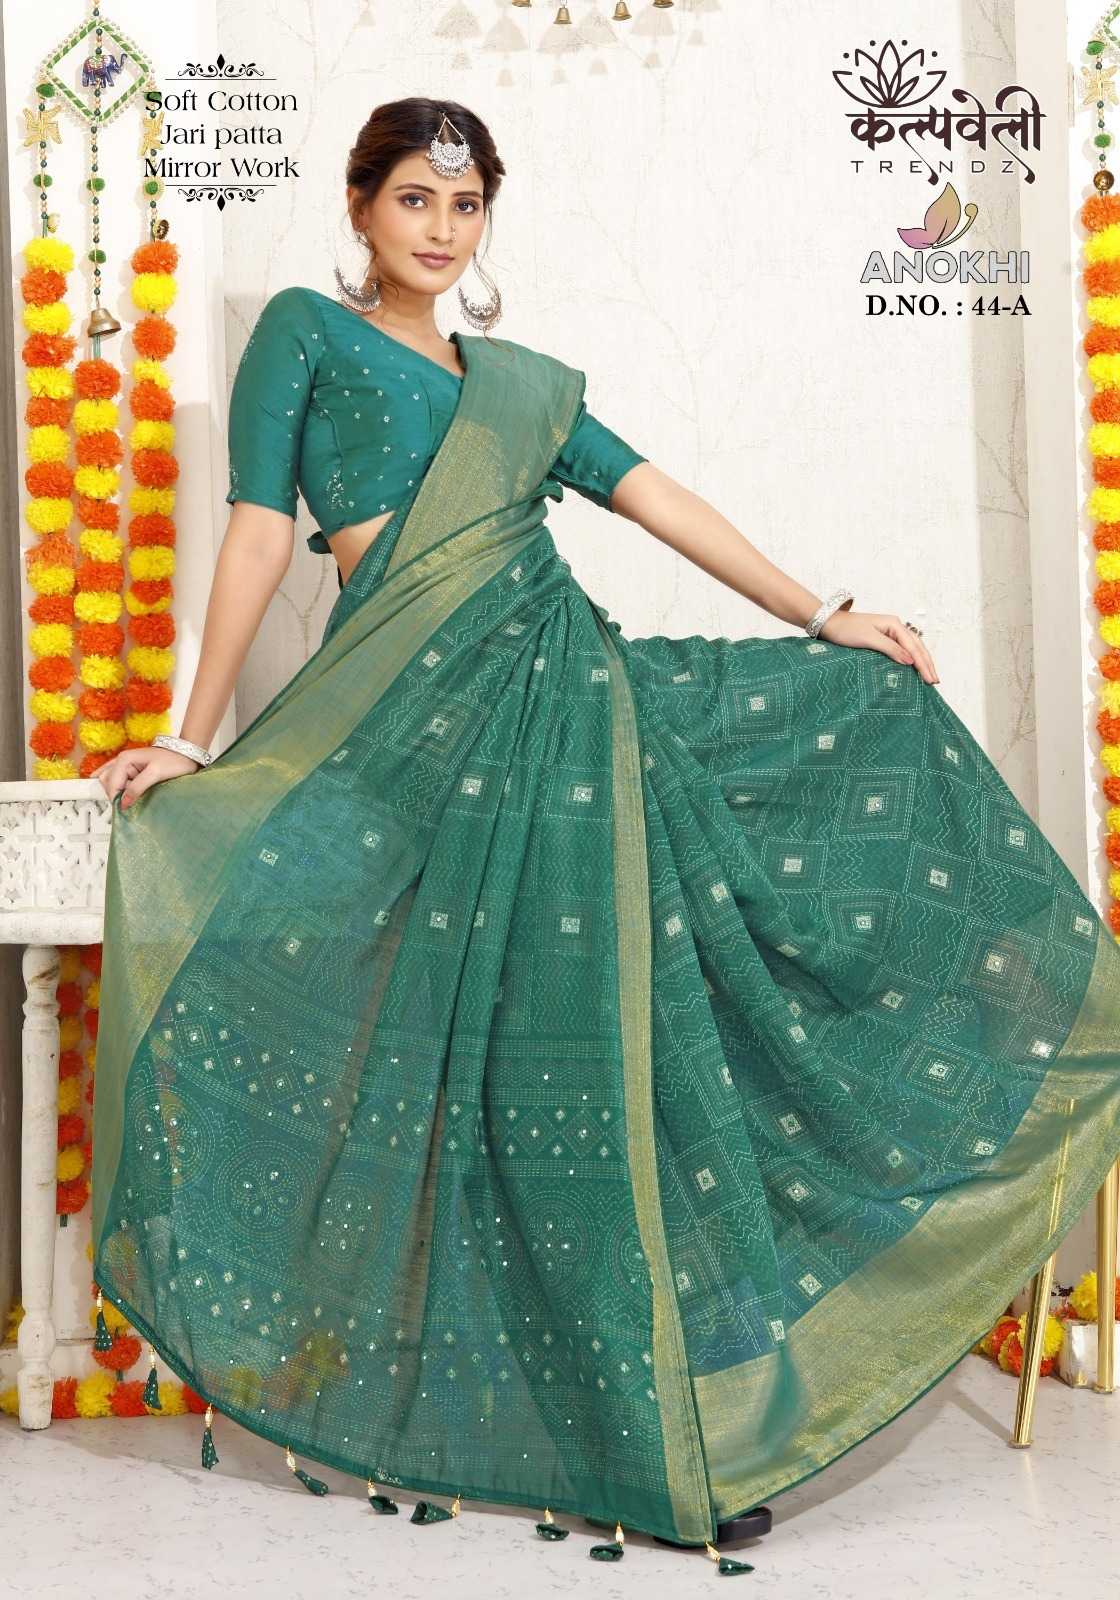 kalpavelly trendz anokhi 44 mirror work saree with work blouse wholesaler